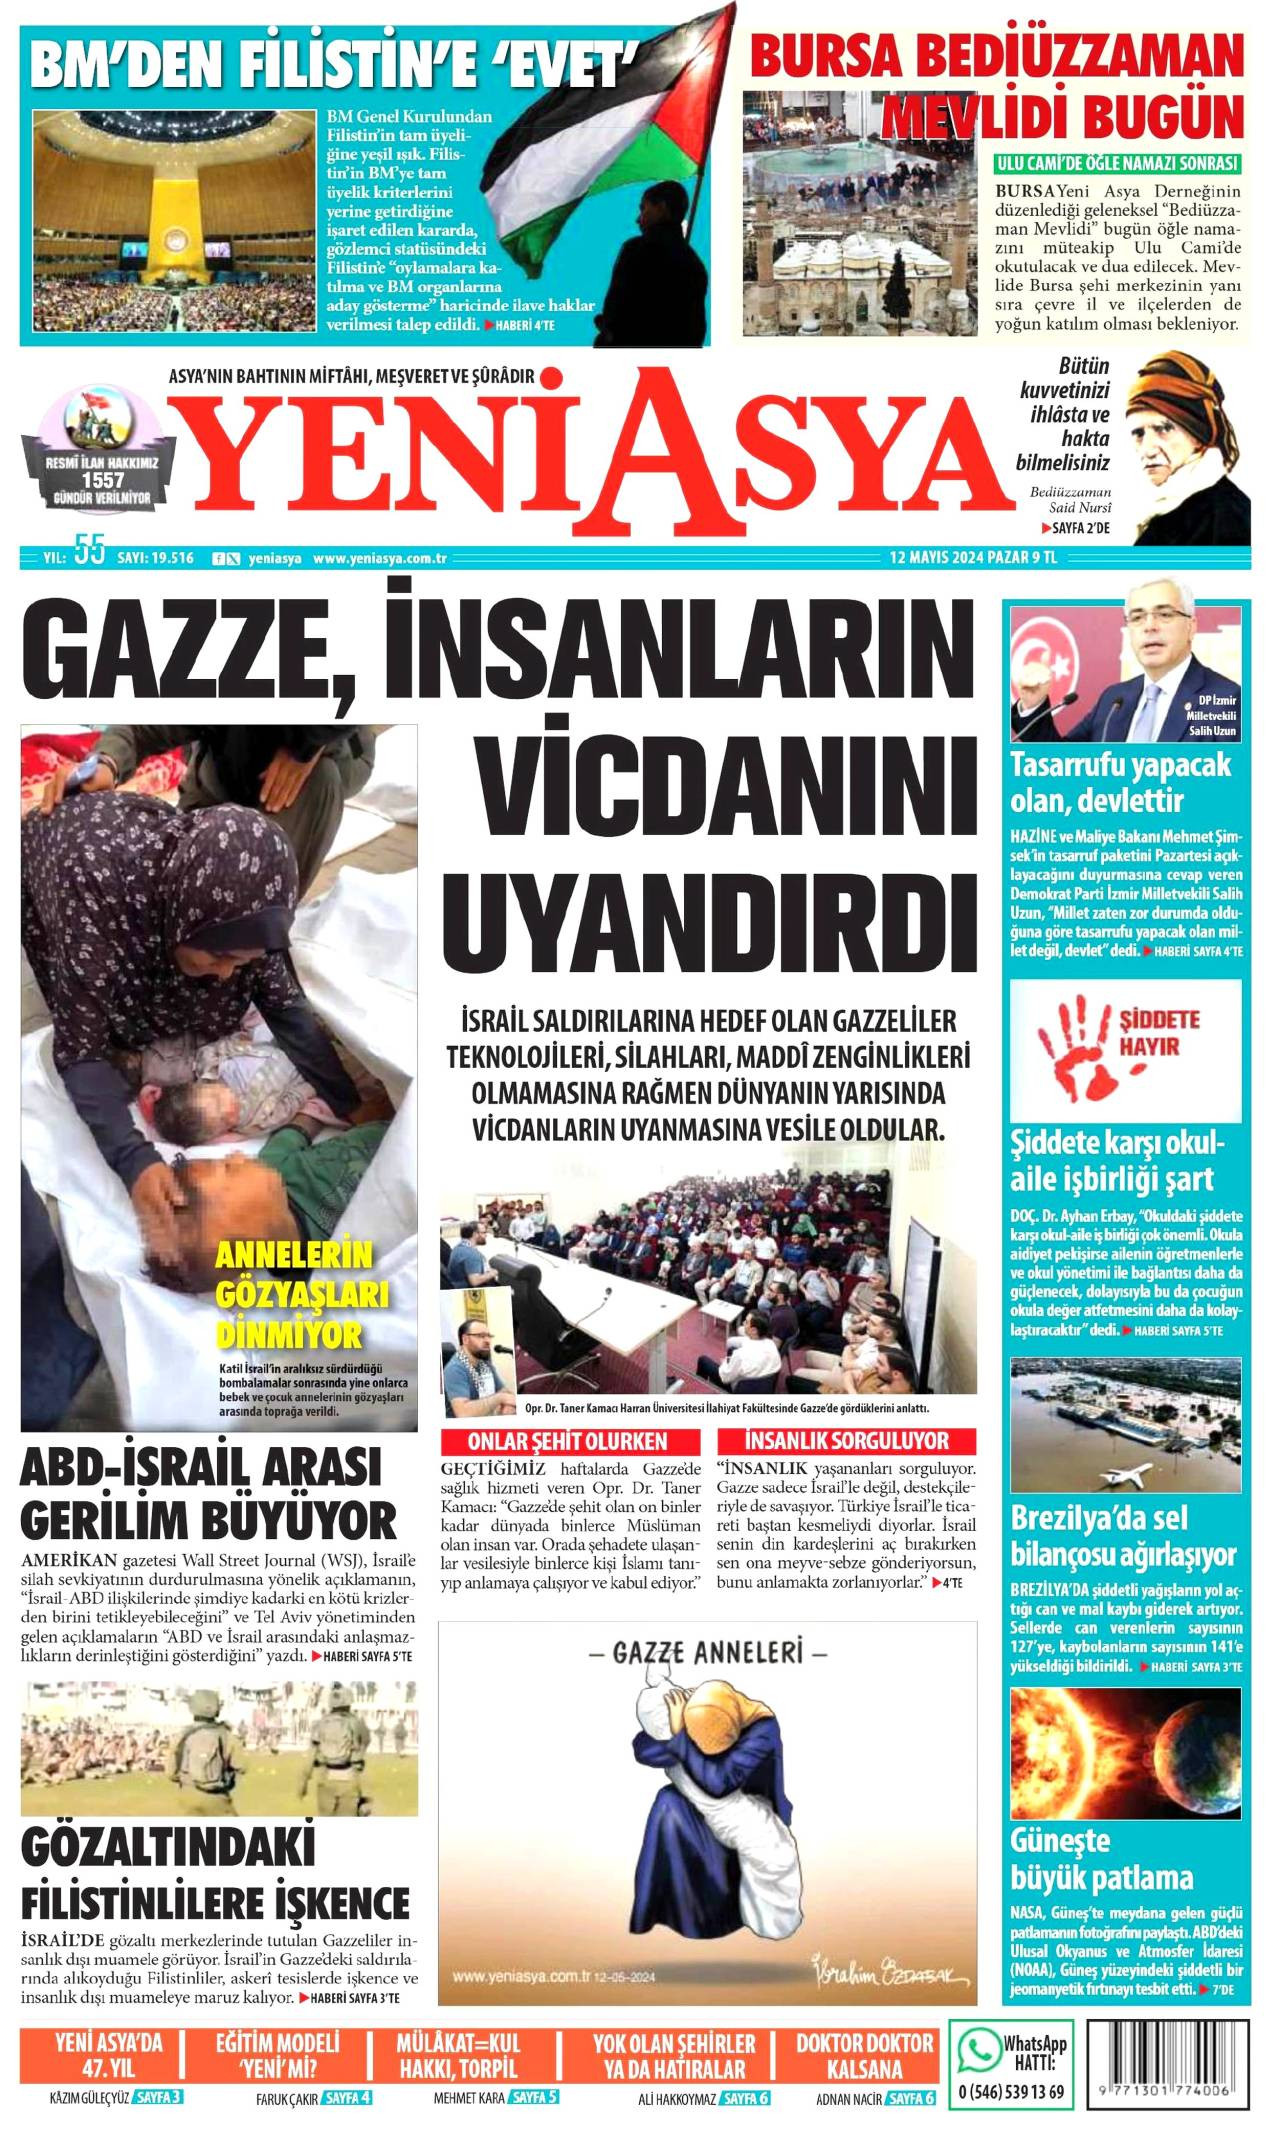  yeniasya Gazetesi